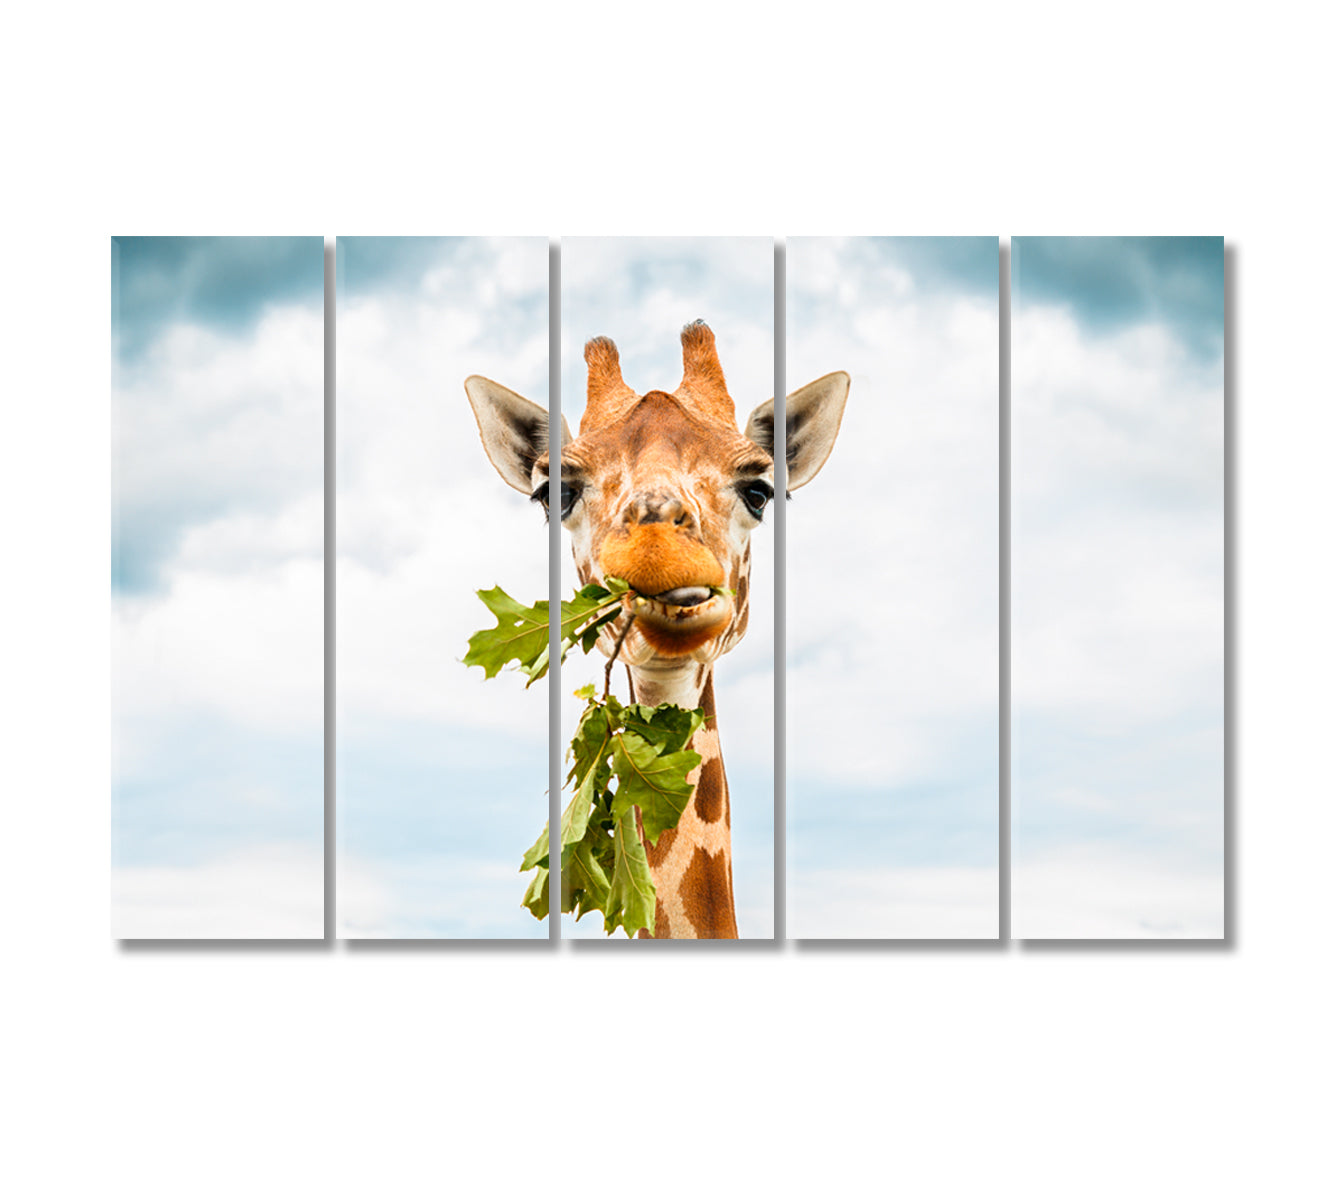 Giraffe Eating Leaves Canvas Print-Canvas Print-CetArt-5 Panels-36x24 inches-CetArt